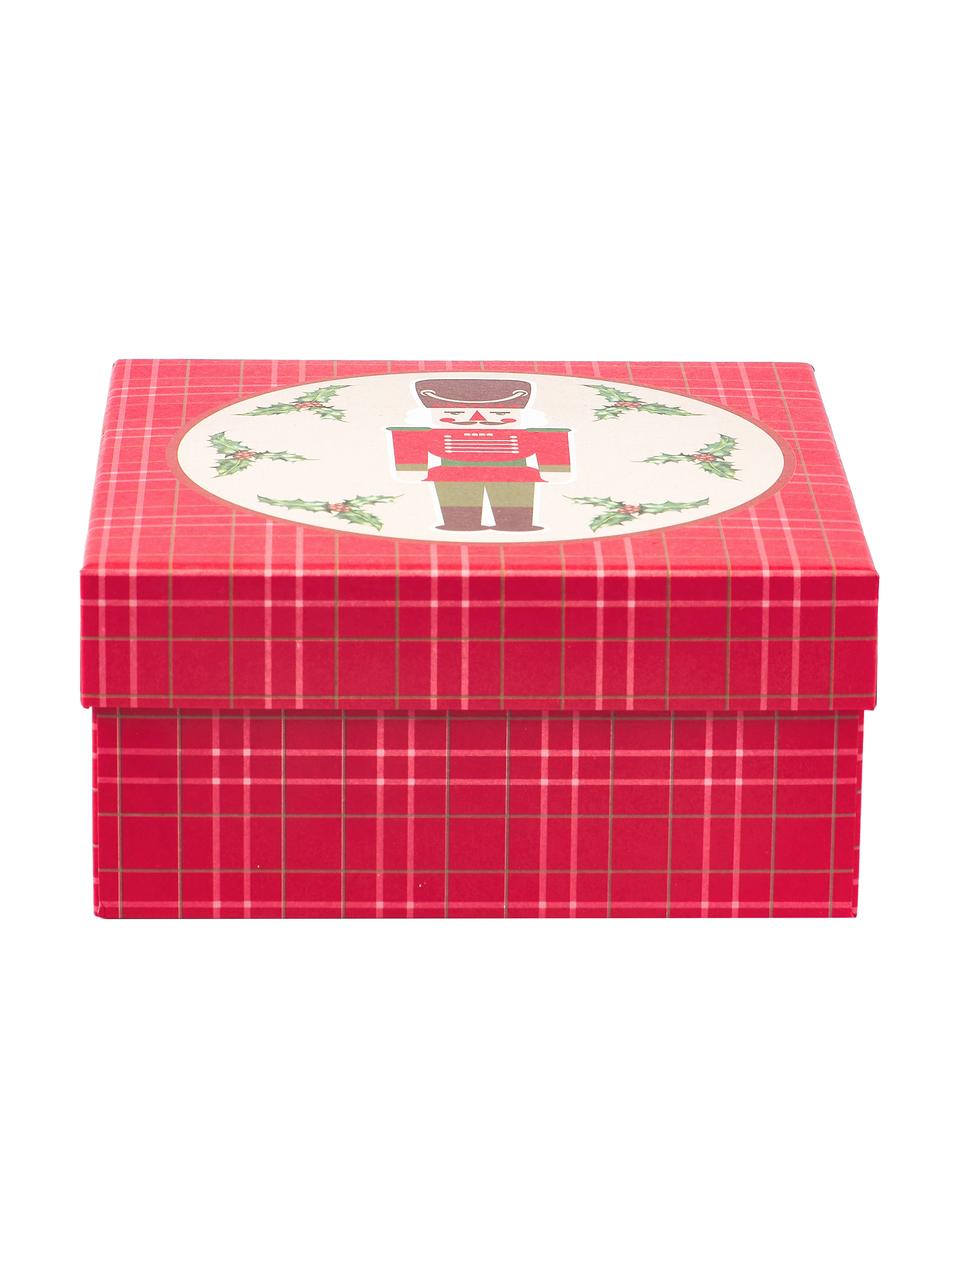 Set de cajas regalo Nussknacker, 3 uds., Papel, Rojo, verde, beige, Set de diferentes tamaños